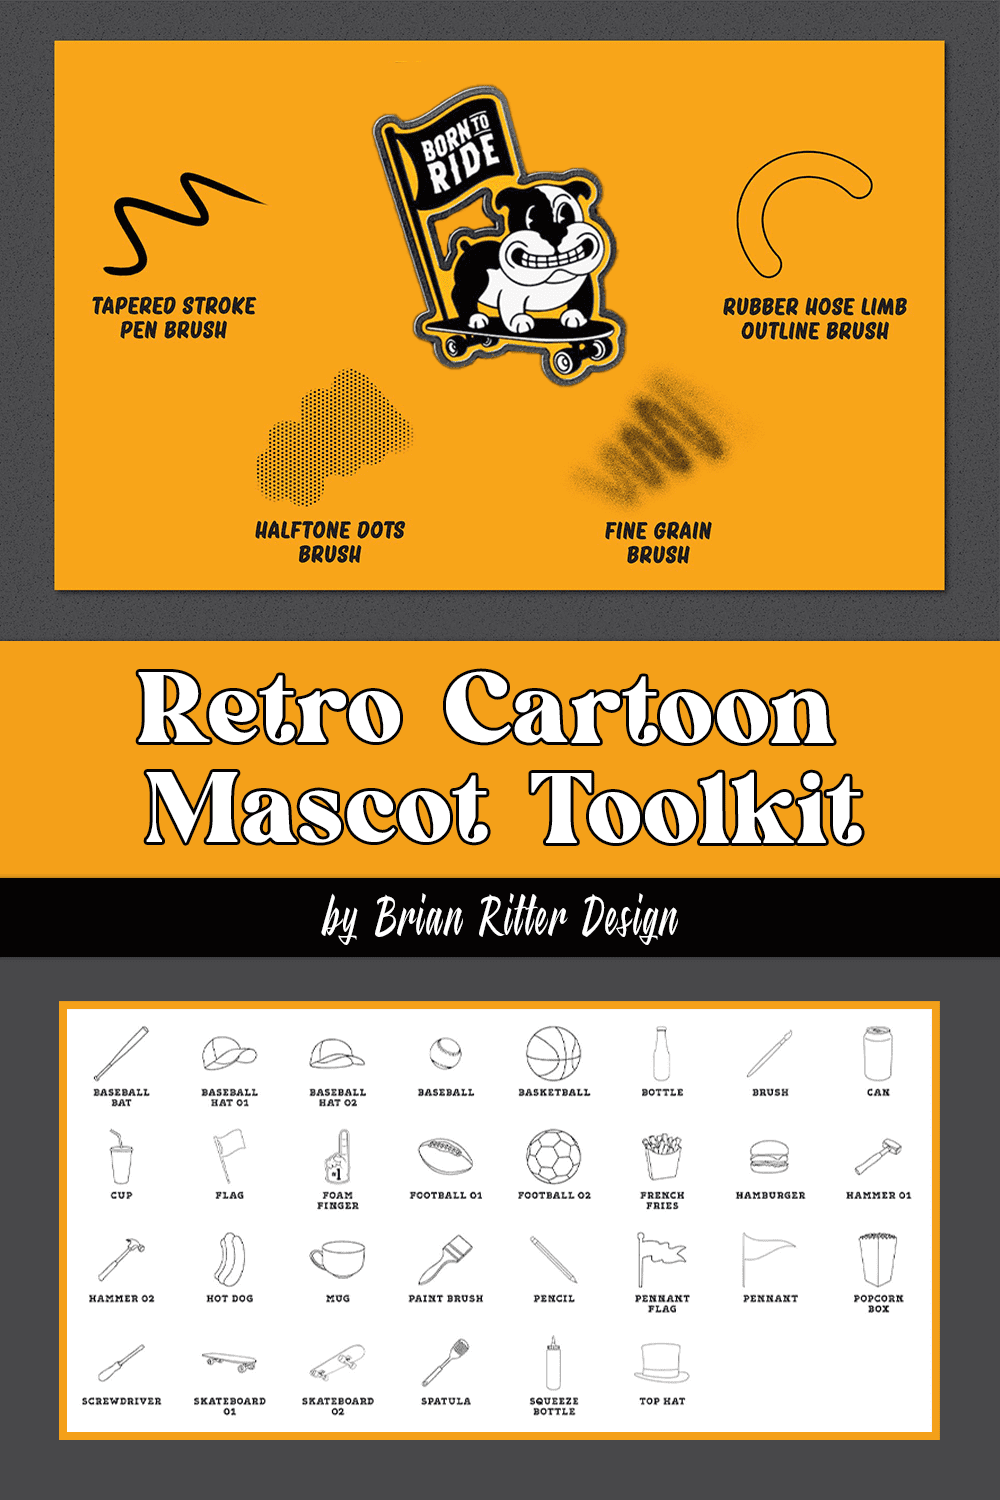 retro cartoon mascot toolkit pinterest 847